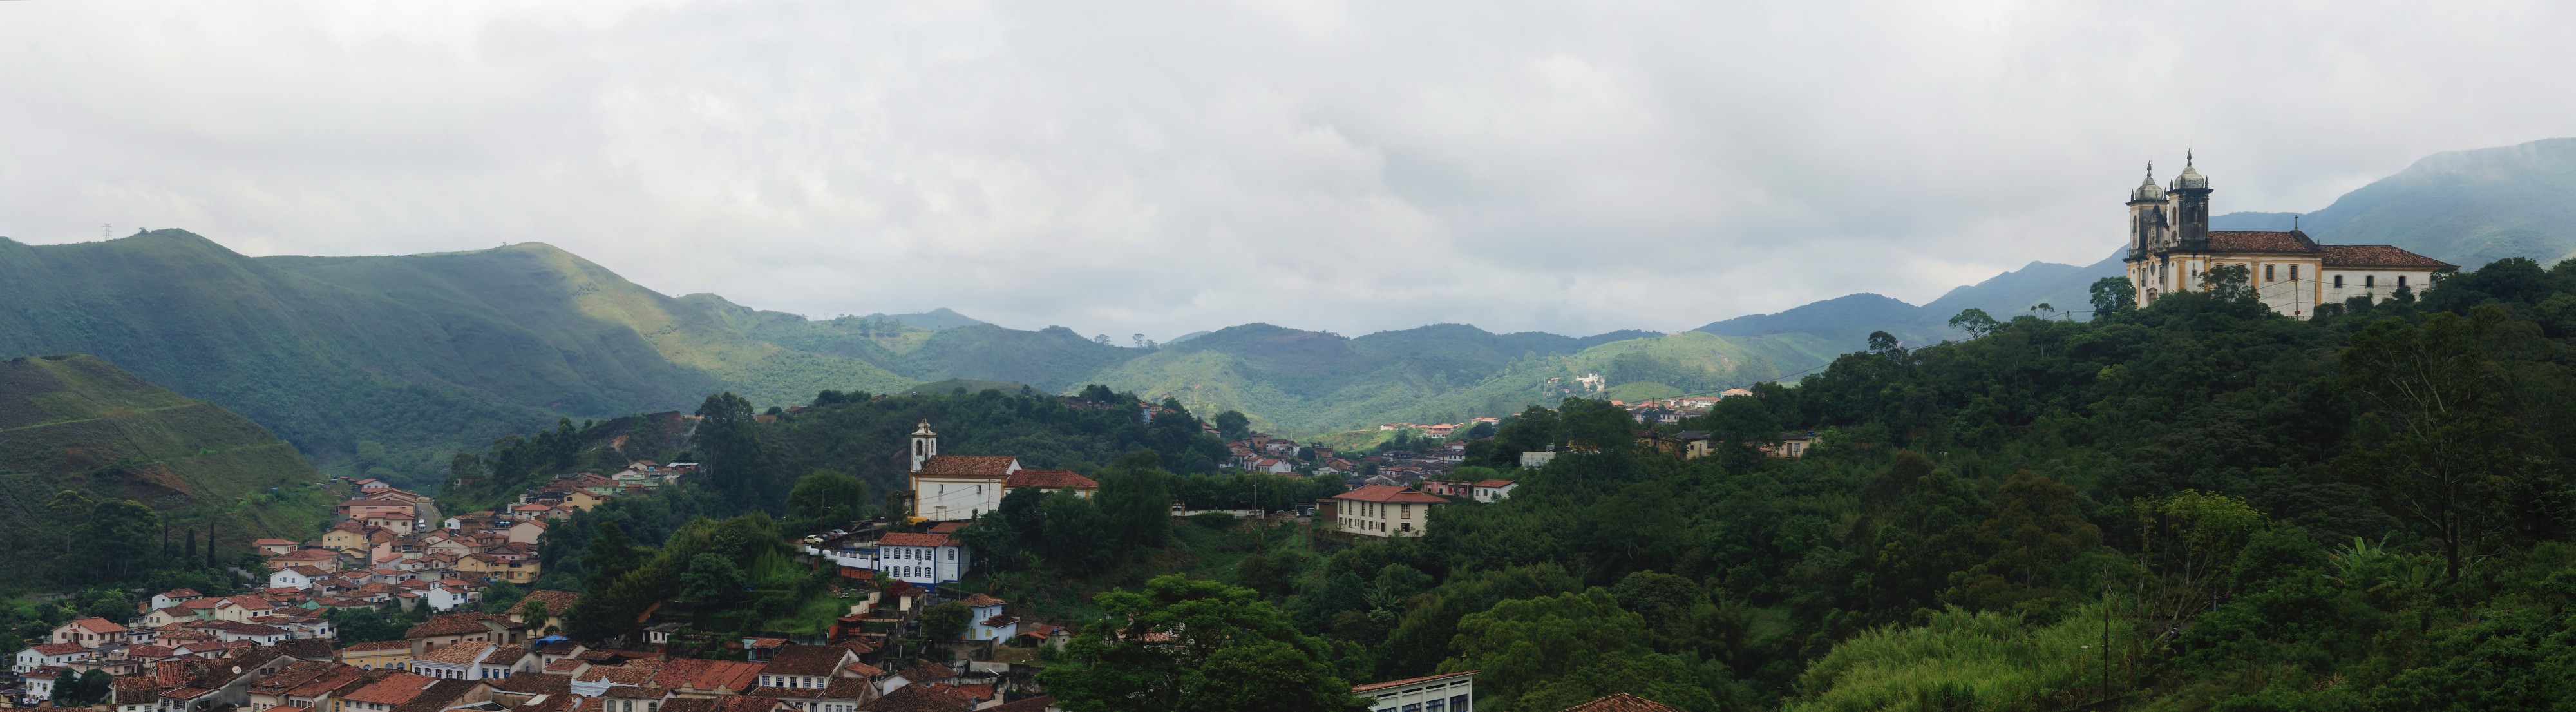 Ouro Preto November 2009-11a